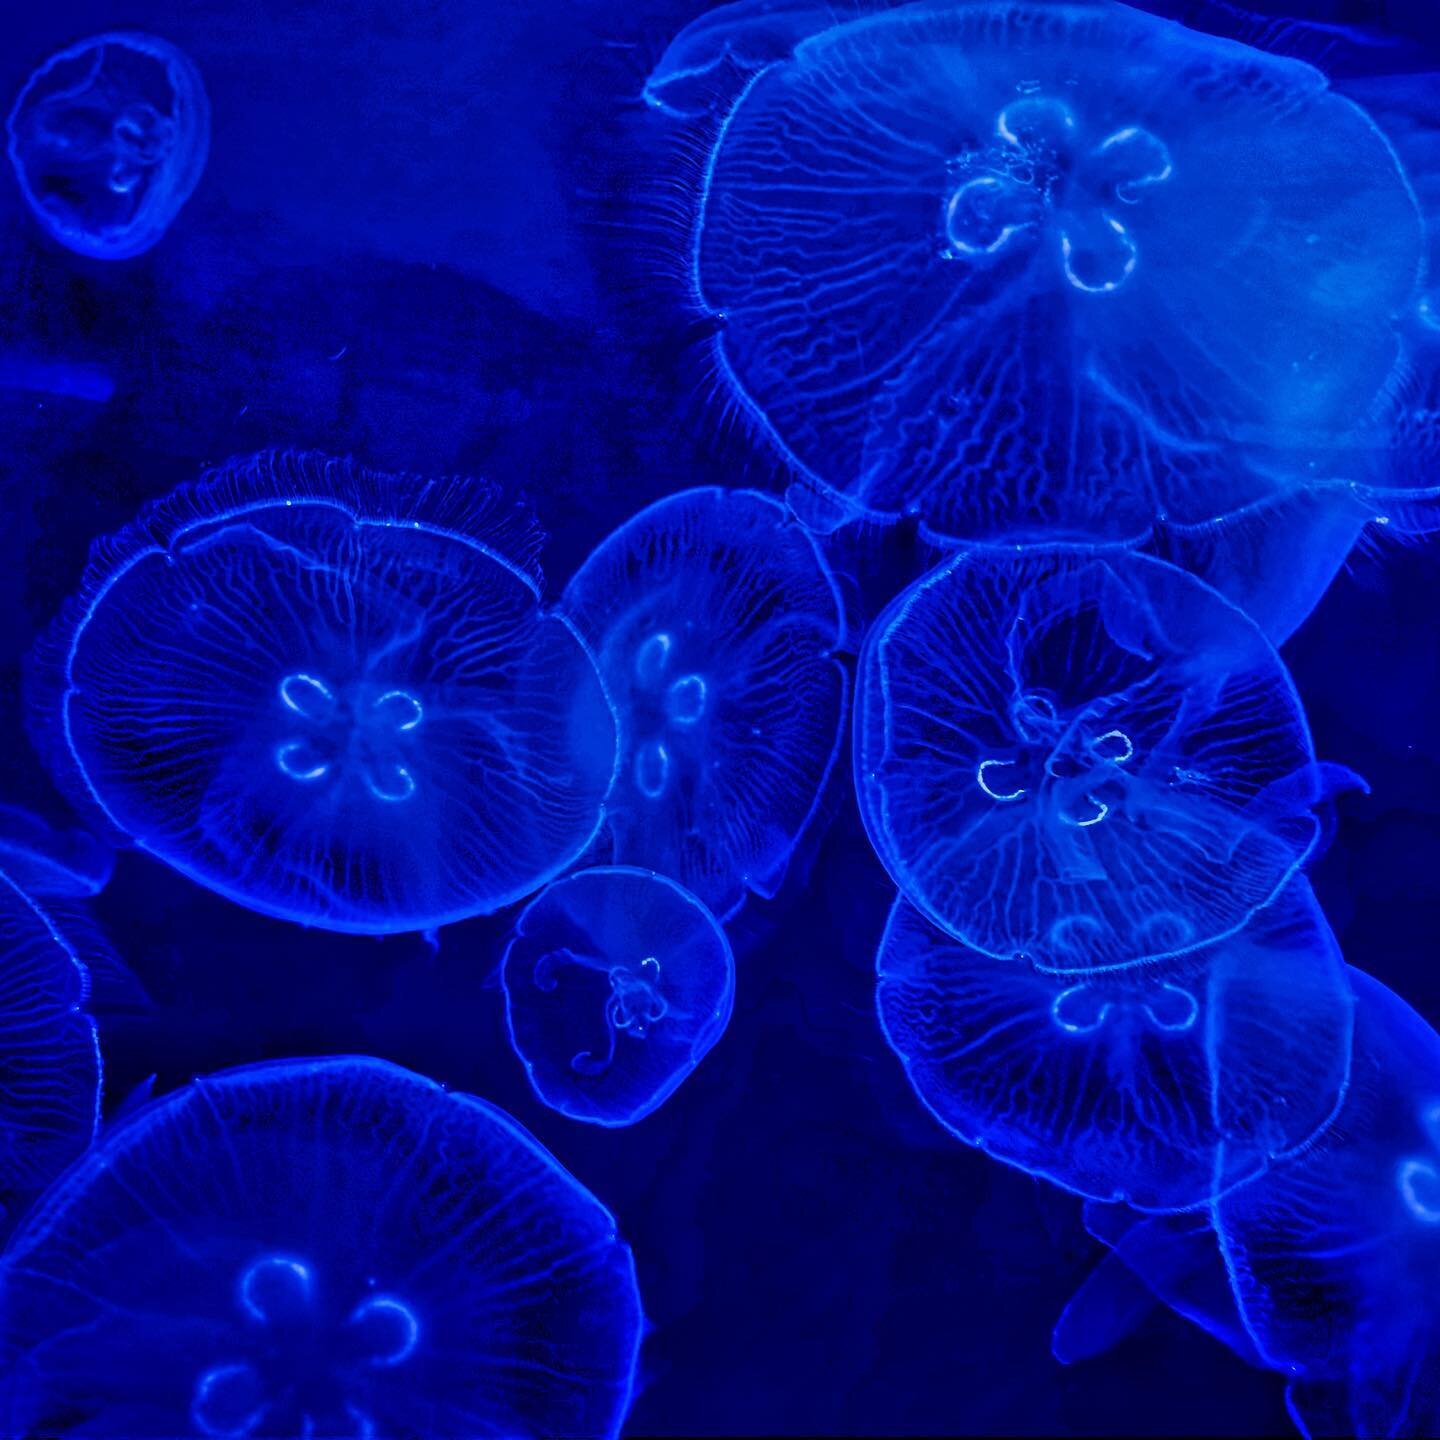 Moon Jellyfish @adventureaquarium in New Jersey. #monochrome #sealife #aquarium #camden